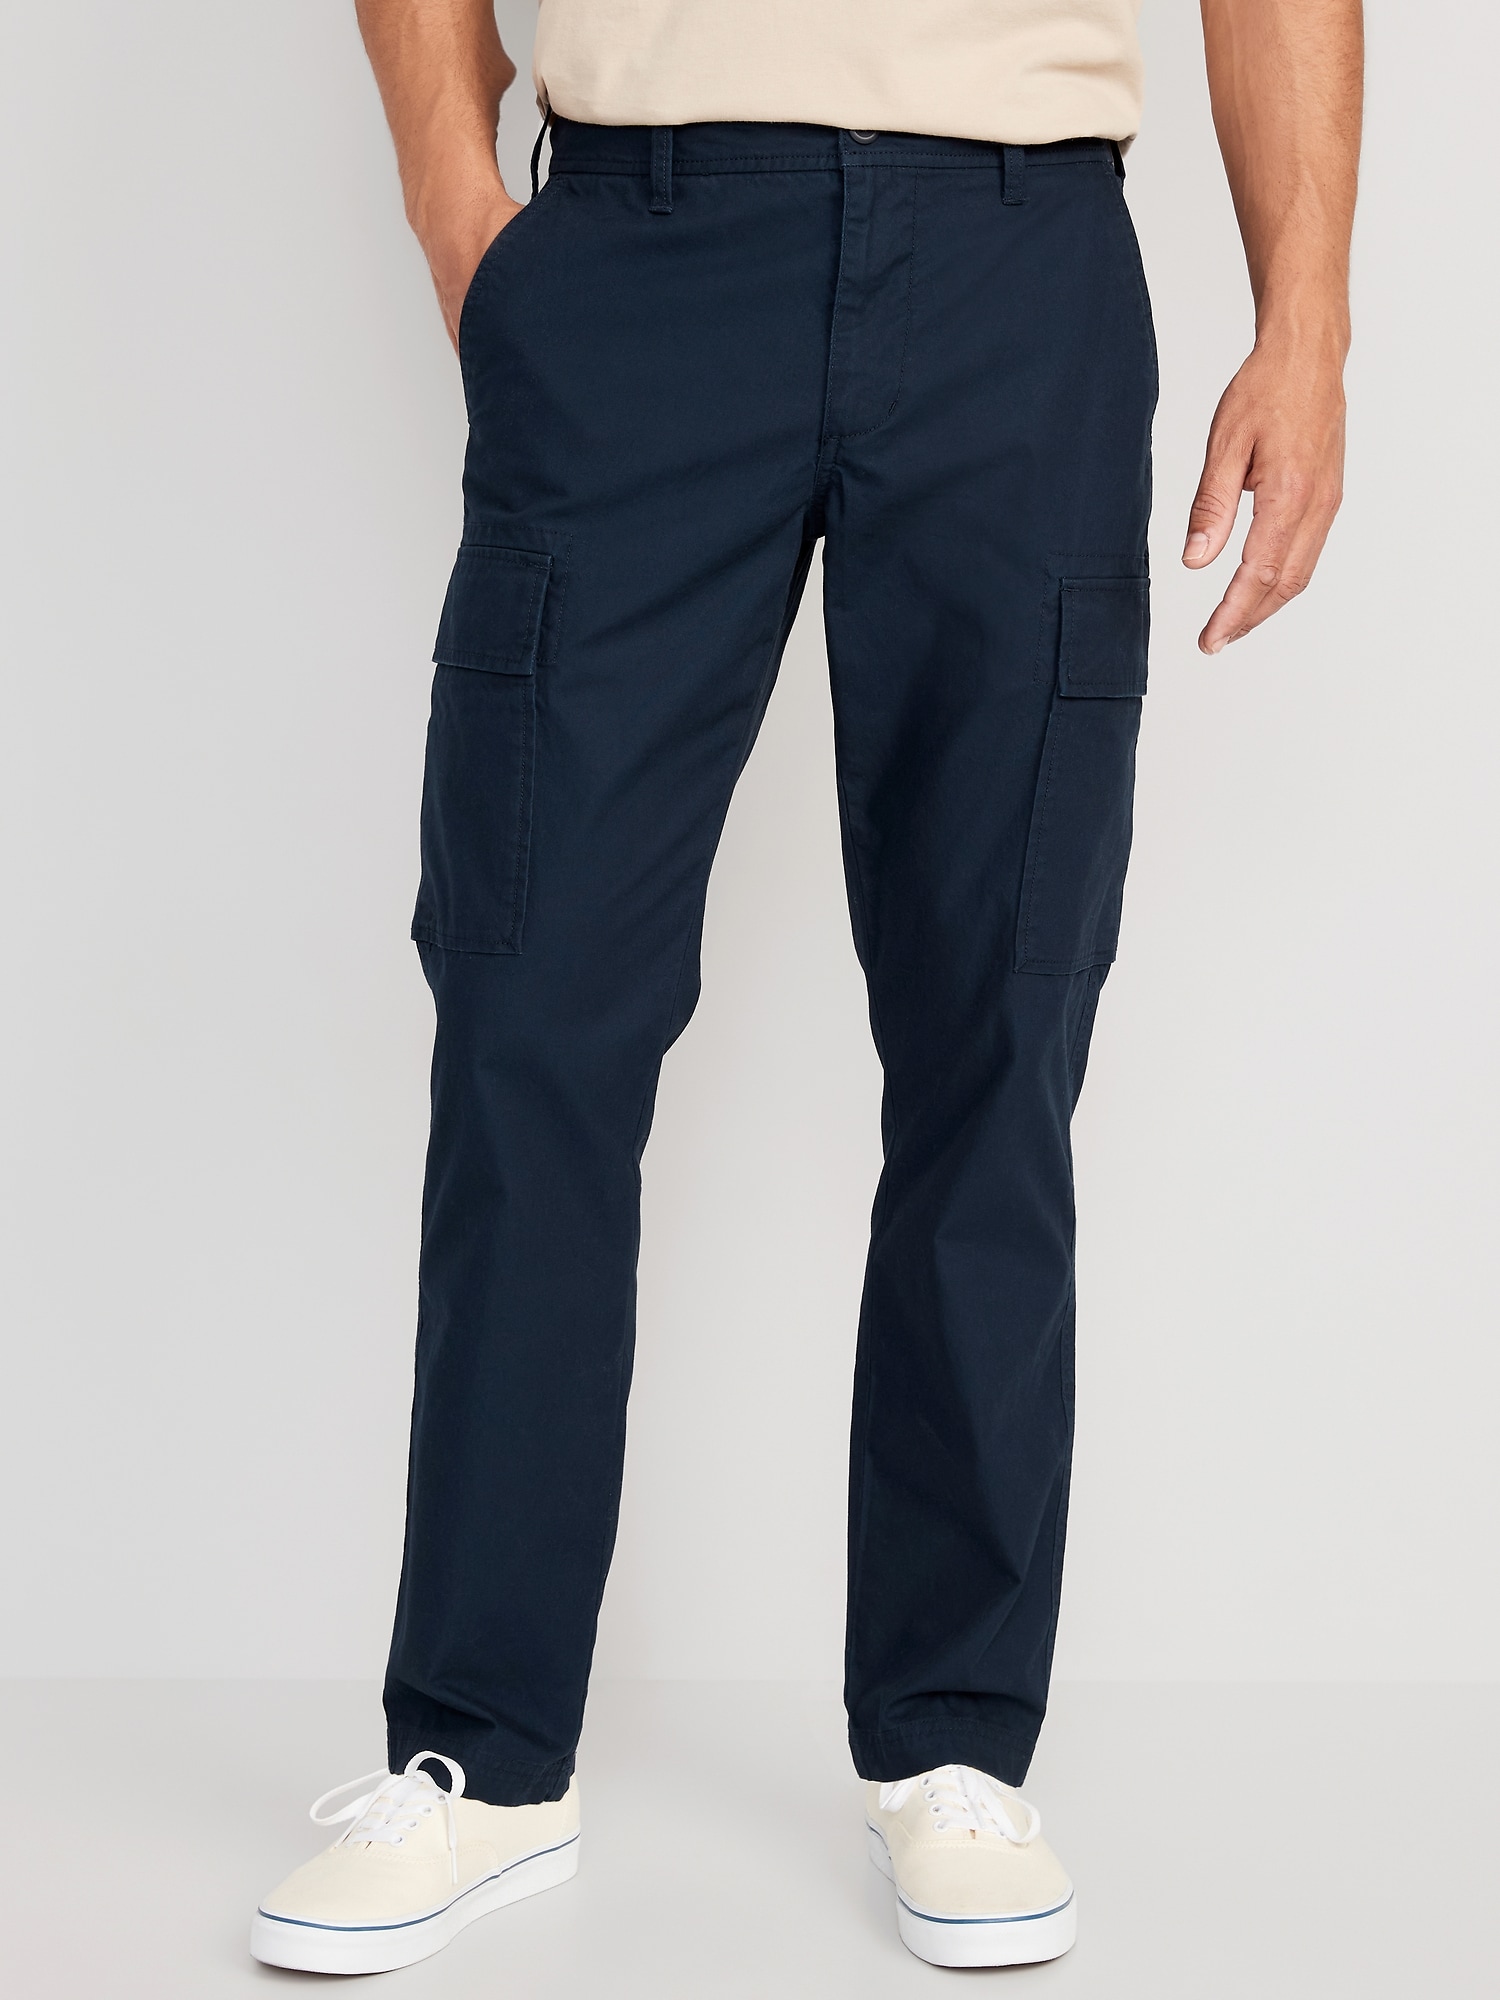 Manfinity Hypemode Men Flap Pocket Side Drawstring Waist Cargo Pants | Cargo  pants style, Cargo trousers, Cargo pants